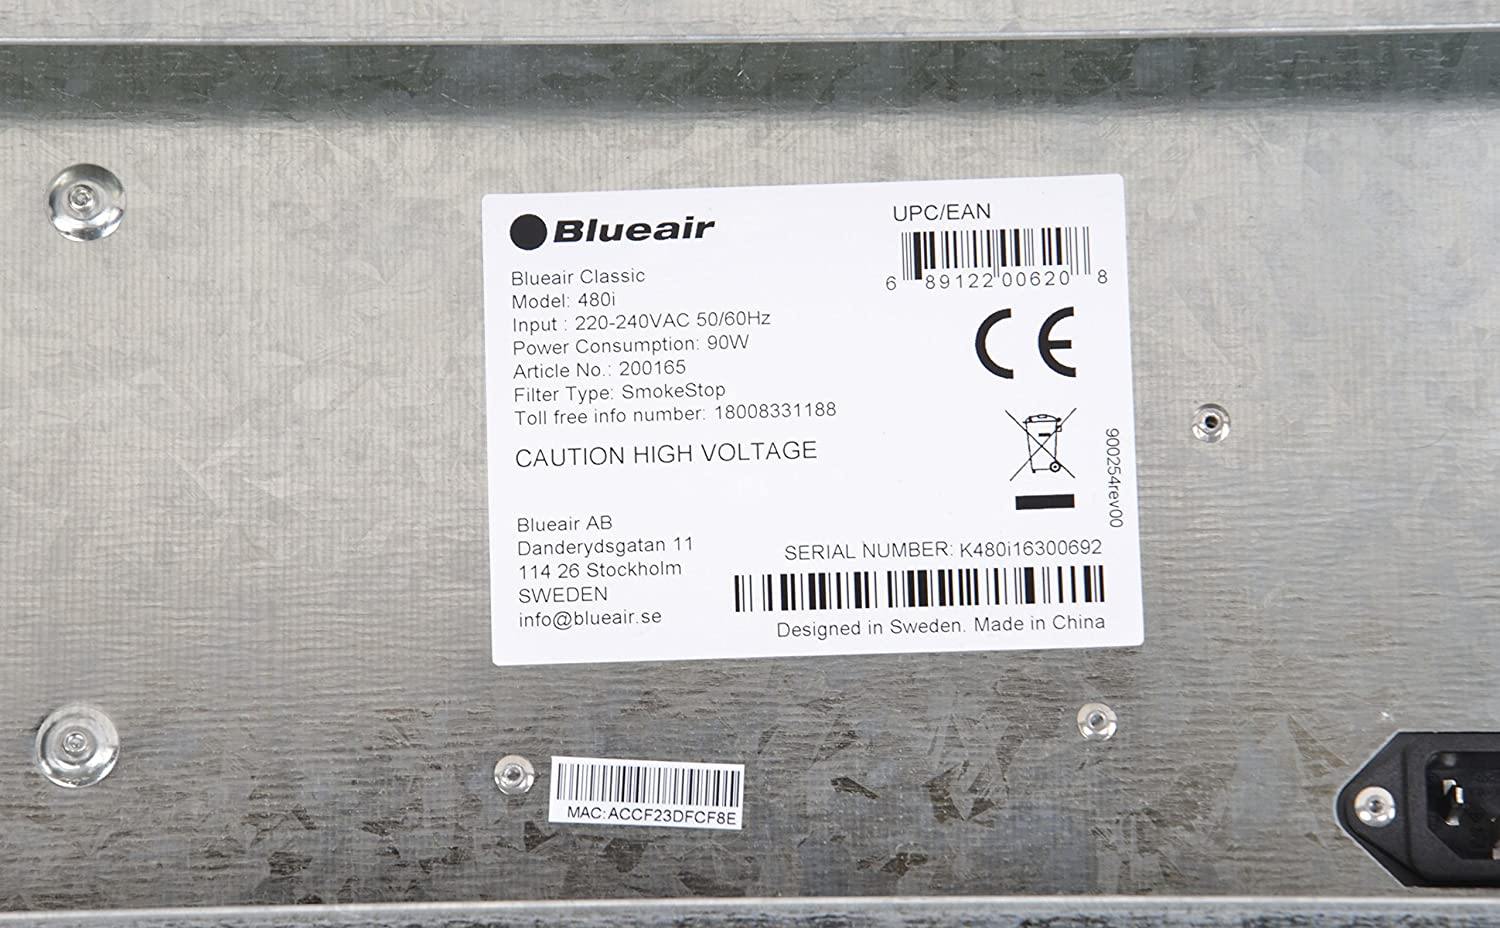 Blueair Classic 480i WiFi Enabled - Mahajan Electronics Online